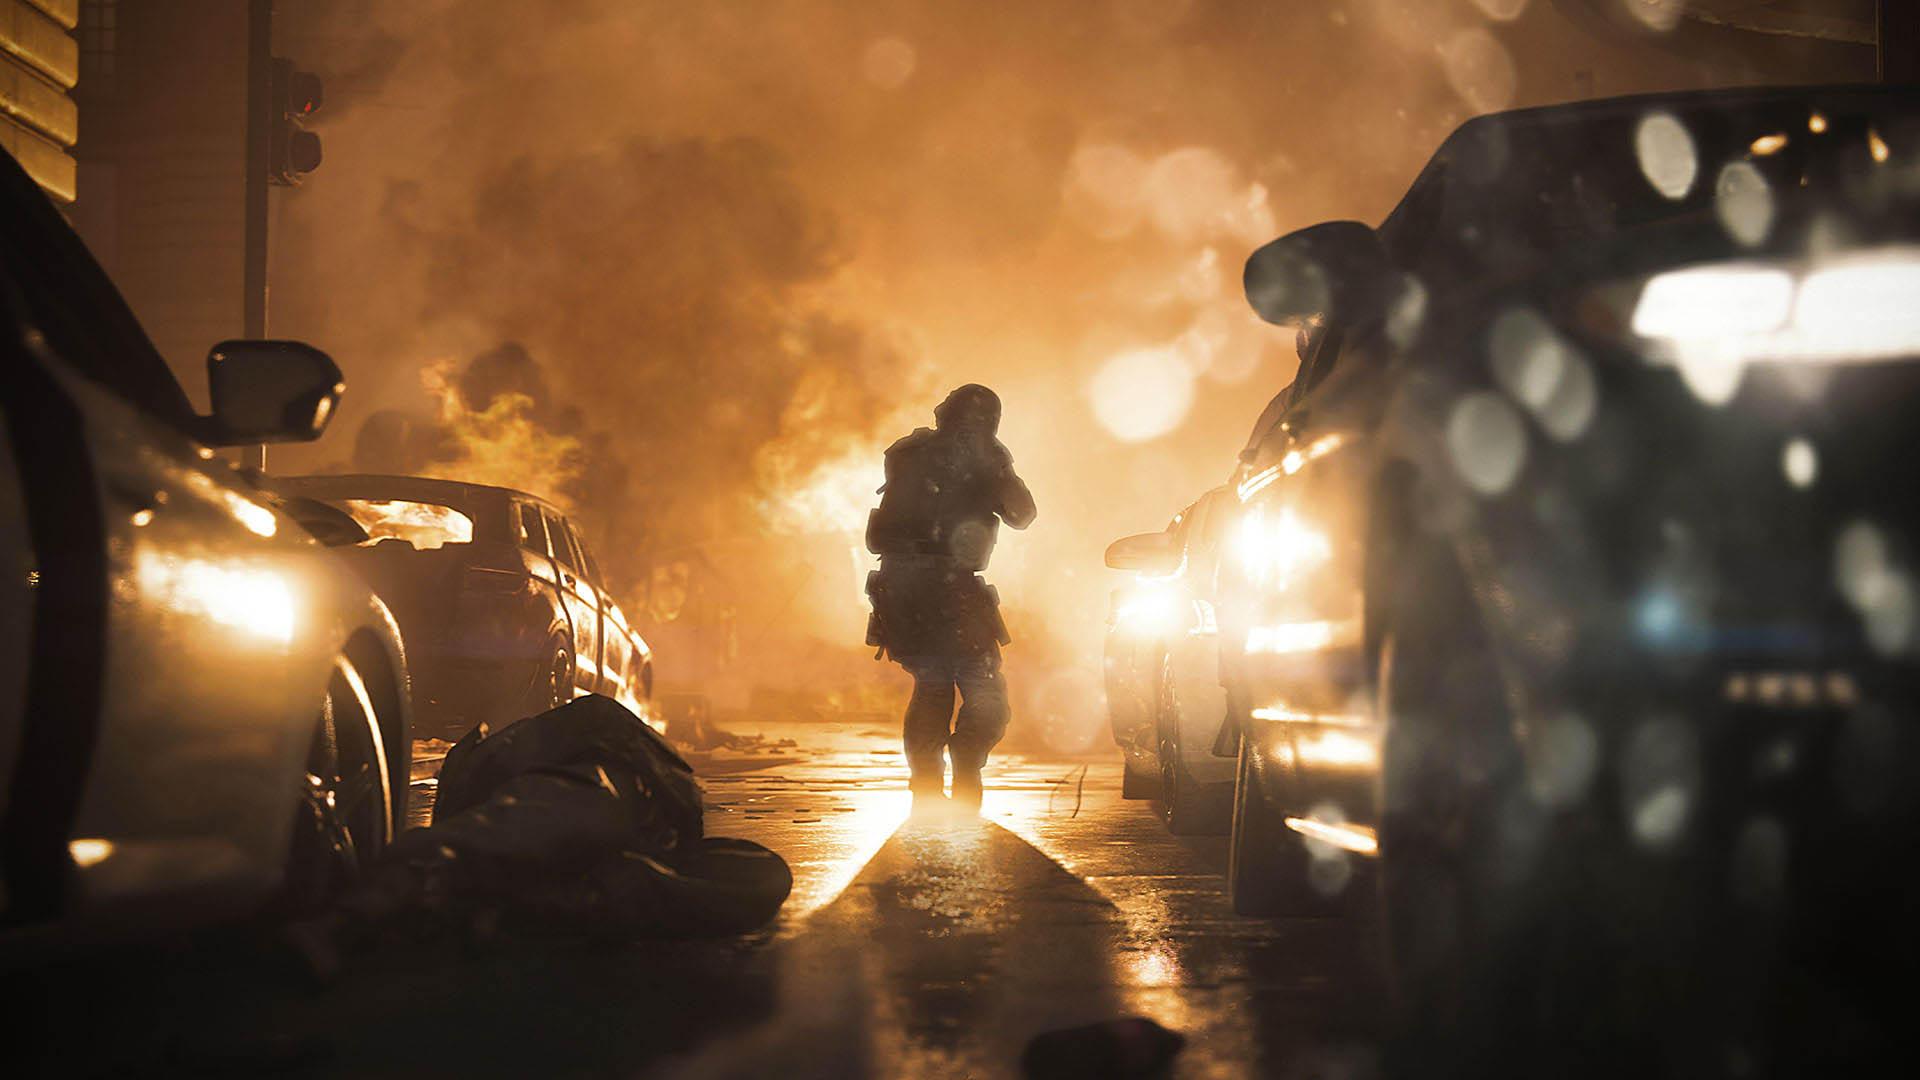 MW] Call of duty Modern Warfare(2019) 3rd Person? : r/modernwarfare